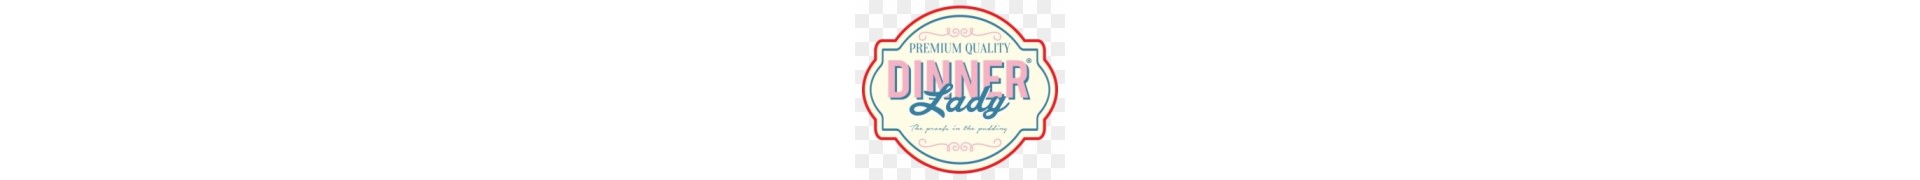 DINNER LADY SALTS